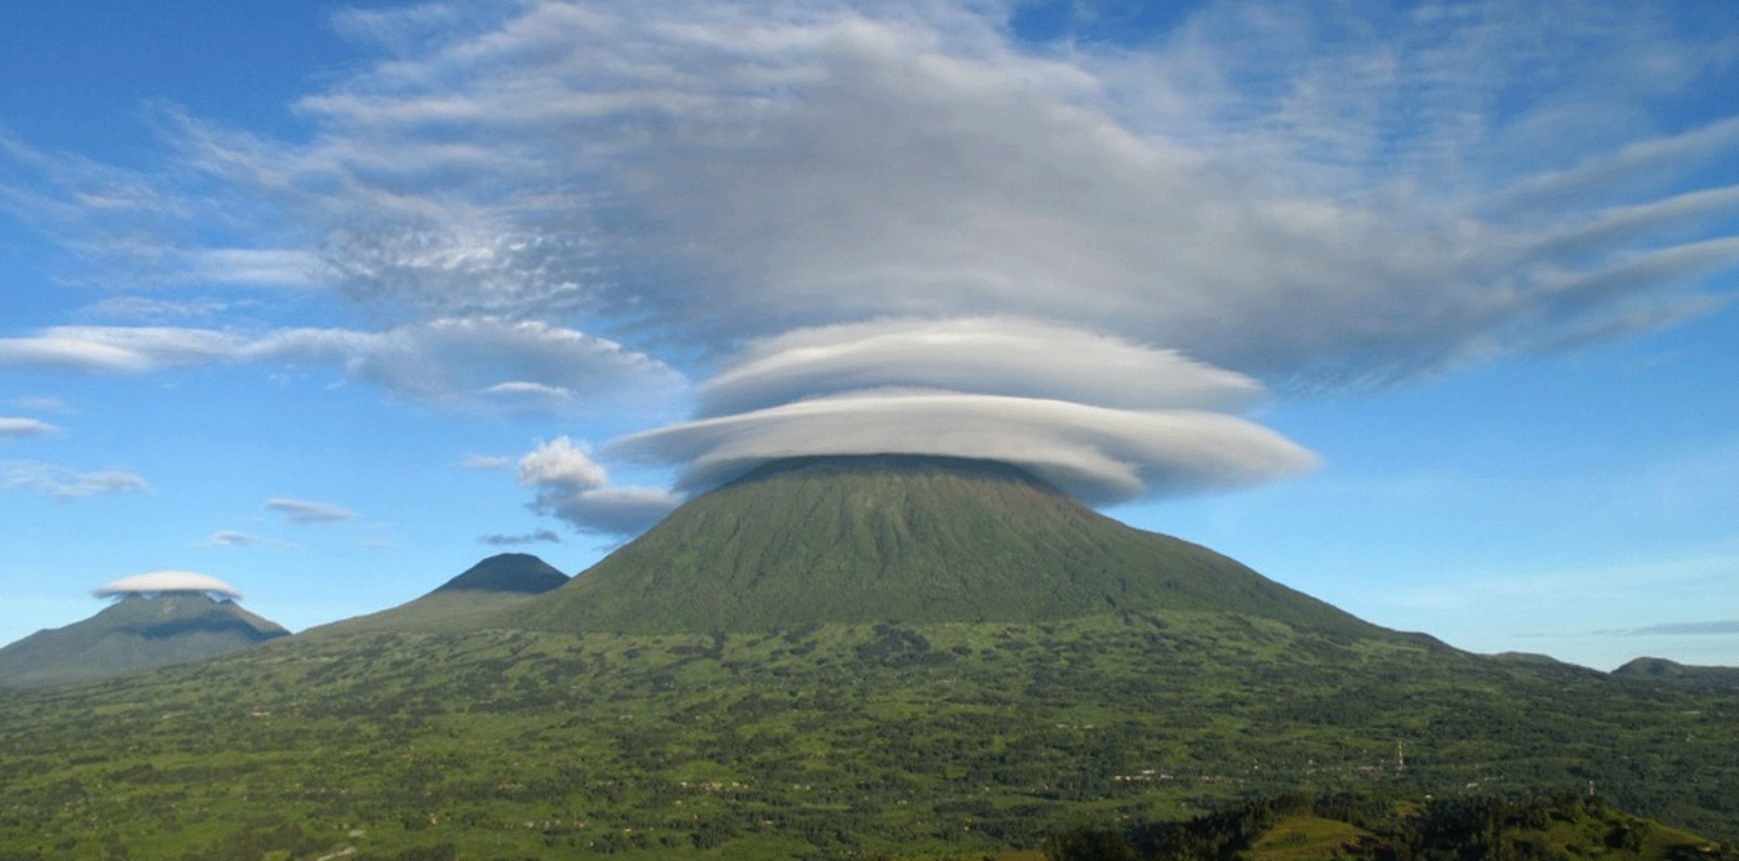 Indonesia's Merapi volcano spews hot clouds, 500 evacuated